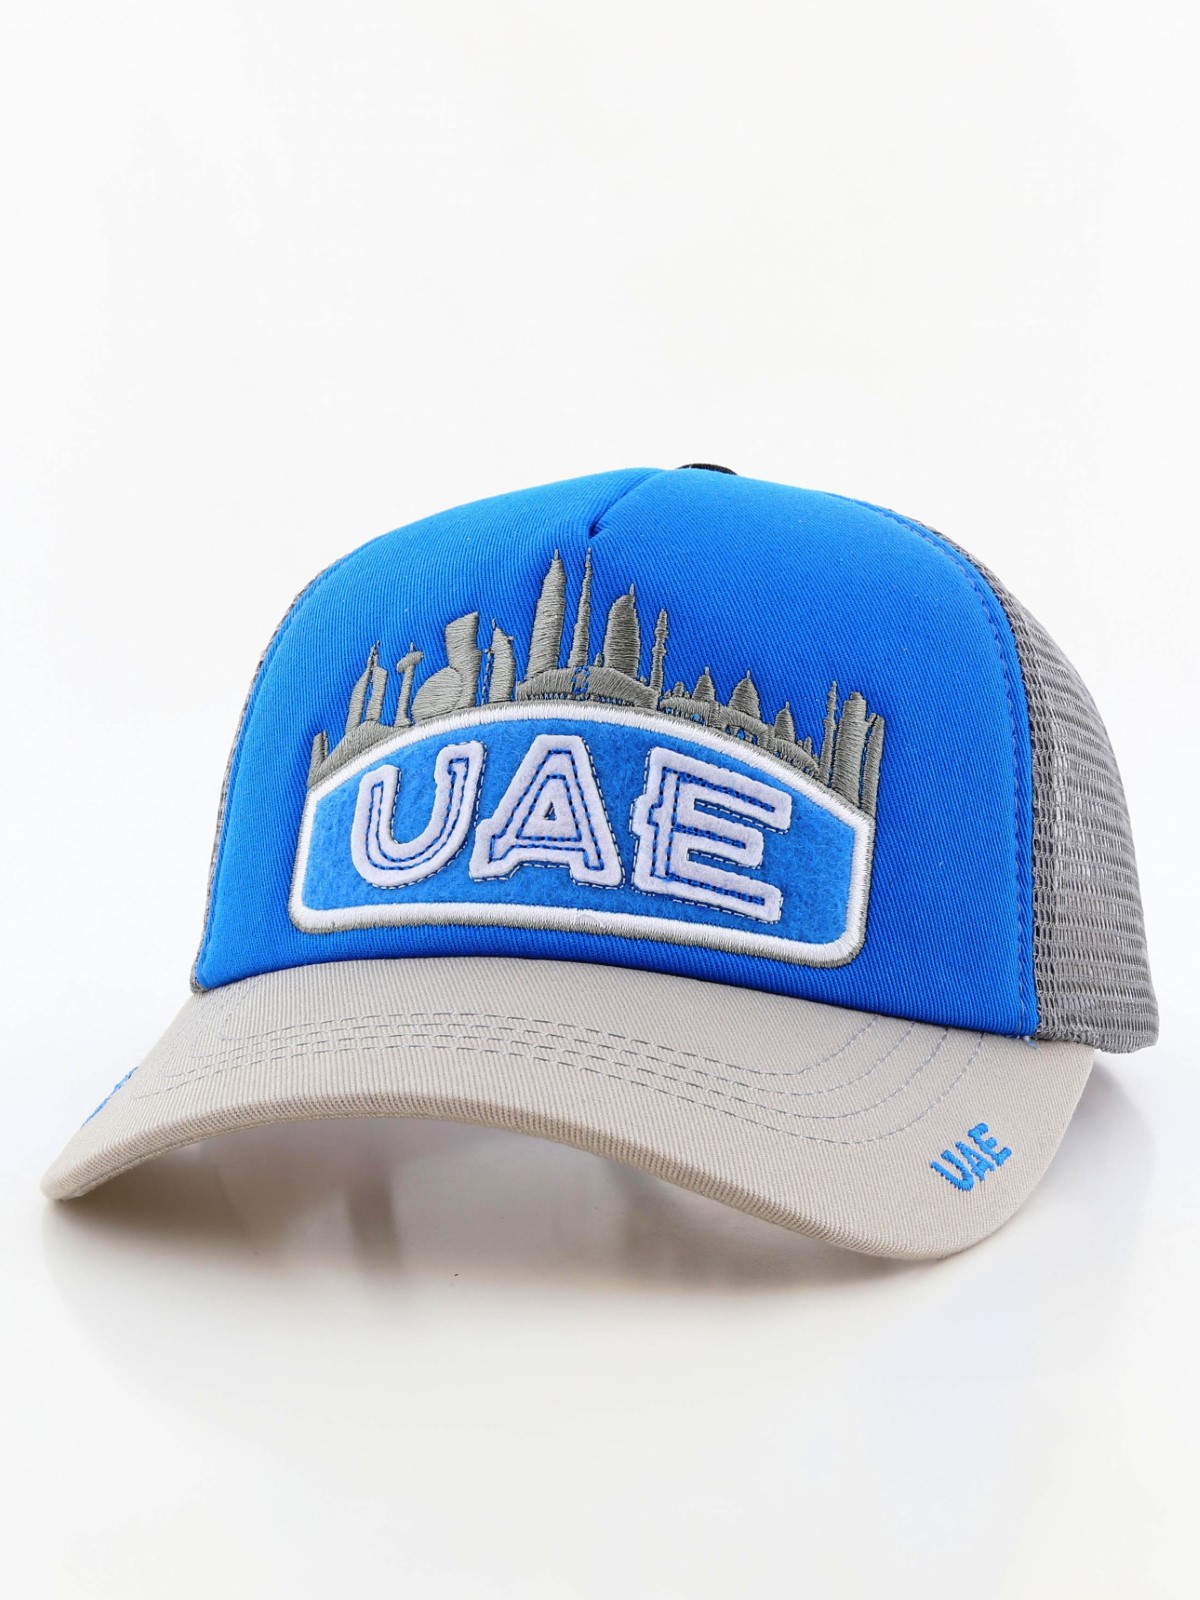 My Town UAE Gray/Blue Trucker Cap